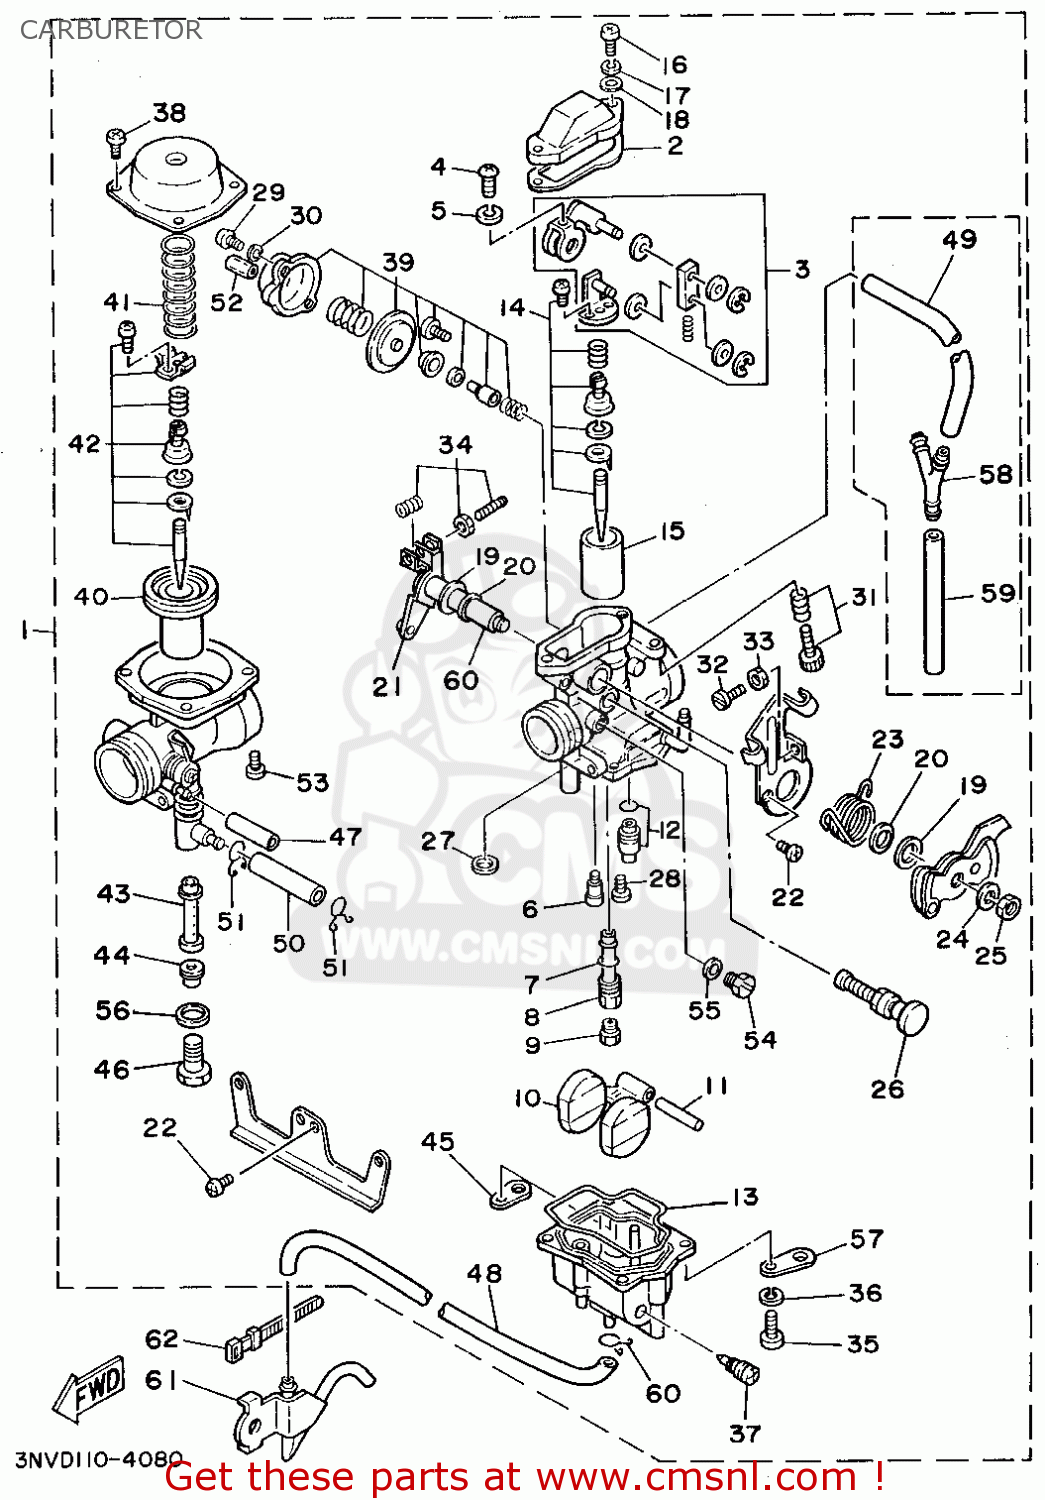 CARBURETOR ASSY 1 for XT350C 1994 (R) CALIFORNIA - order ... 84 cj7 fuse box 